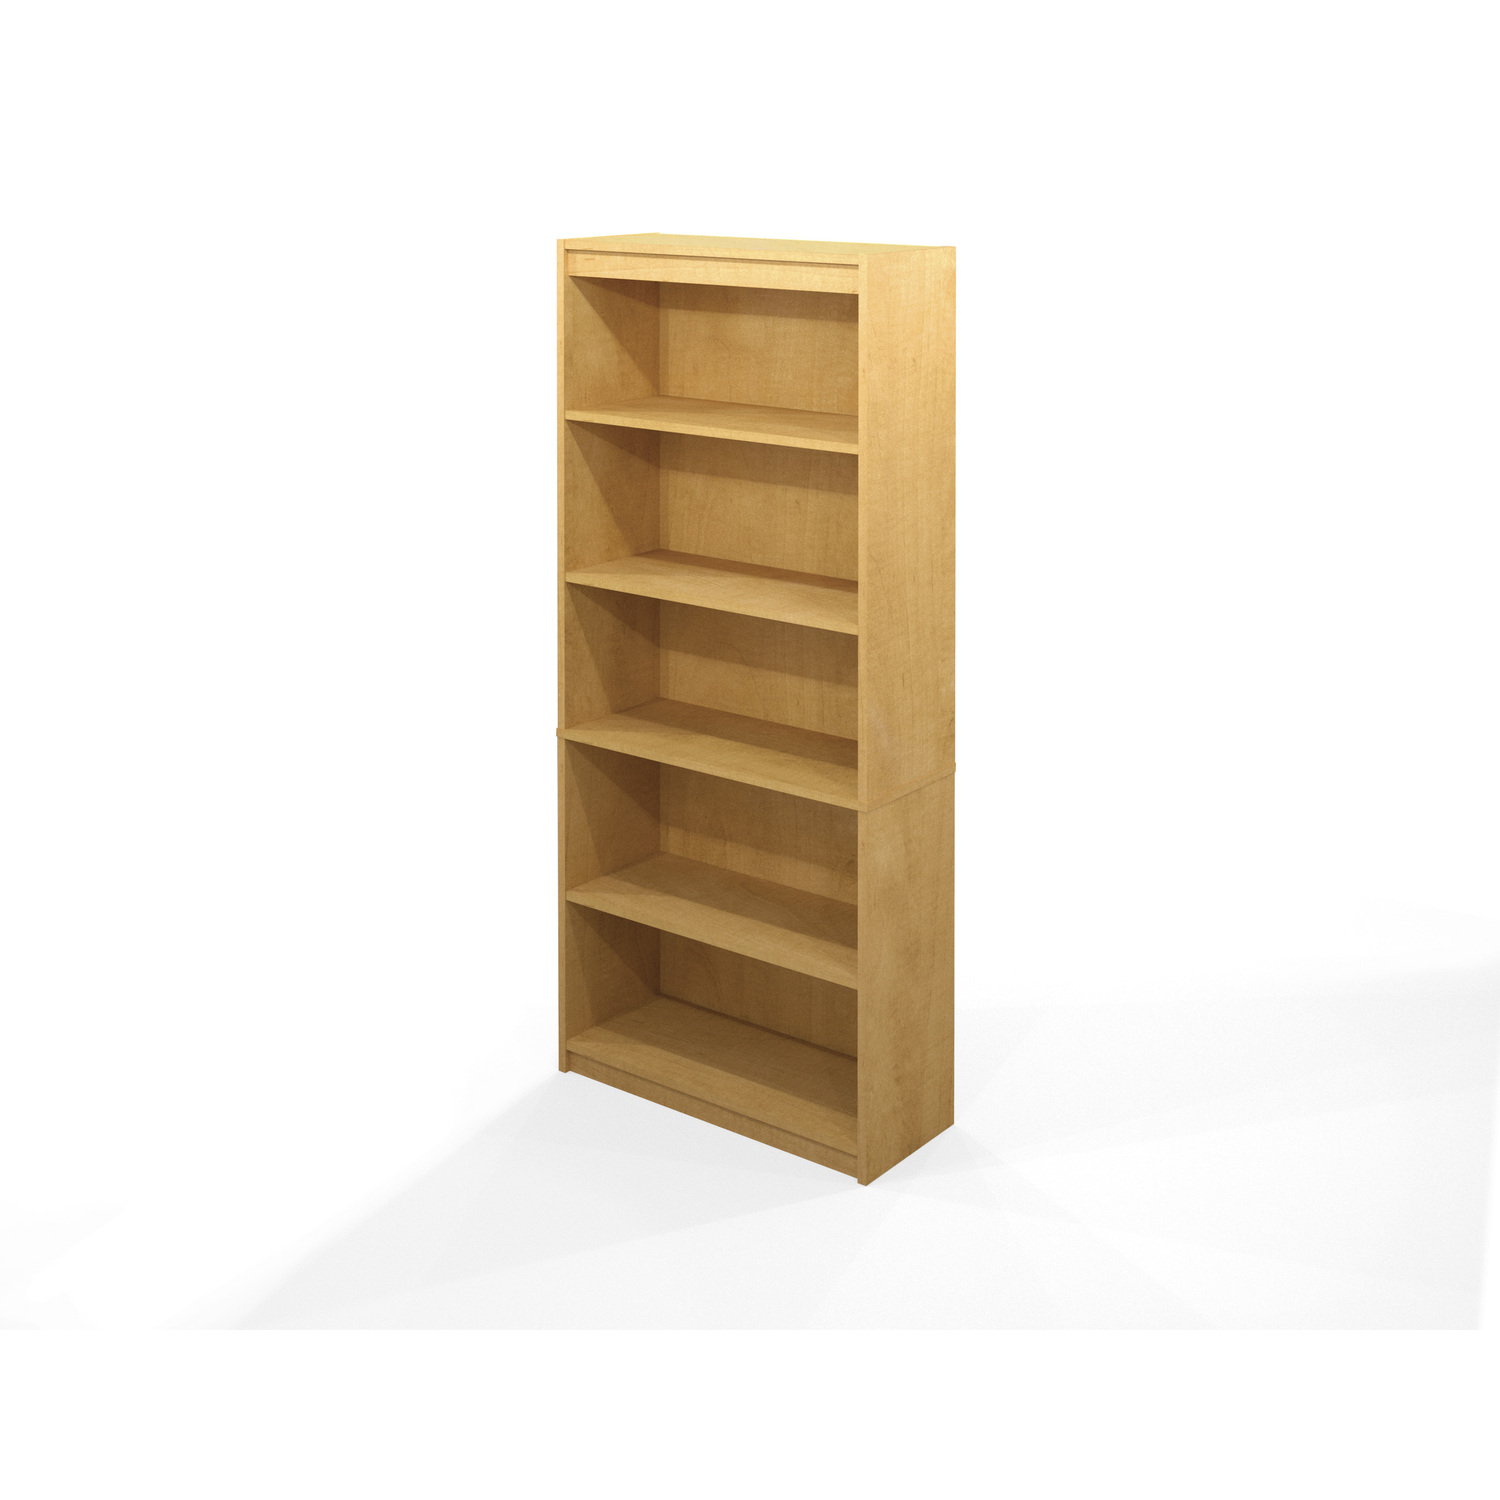 BESTAR Standard Bookcase-Finish:Secret Maple - image 1 of 4